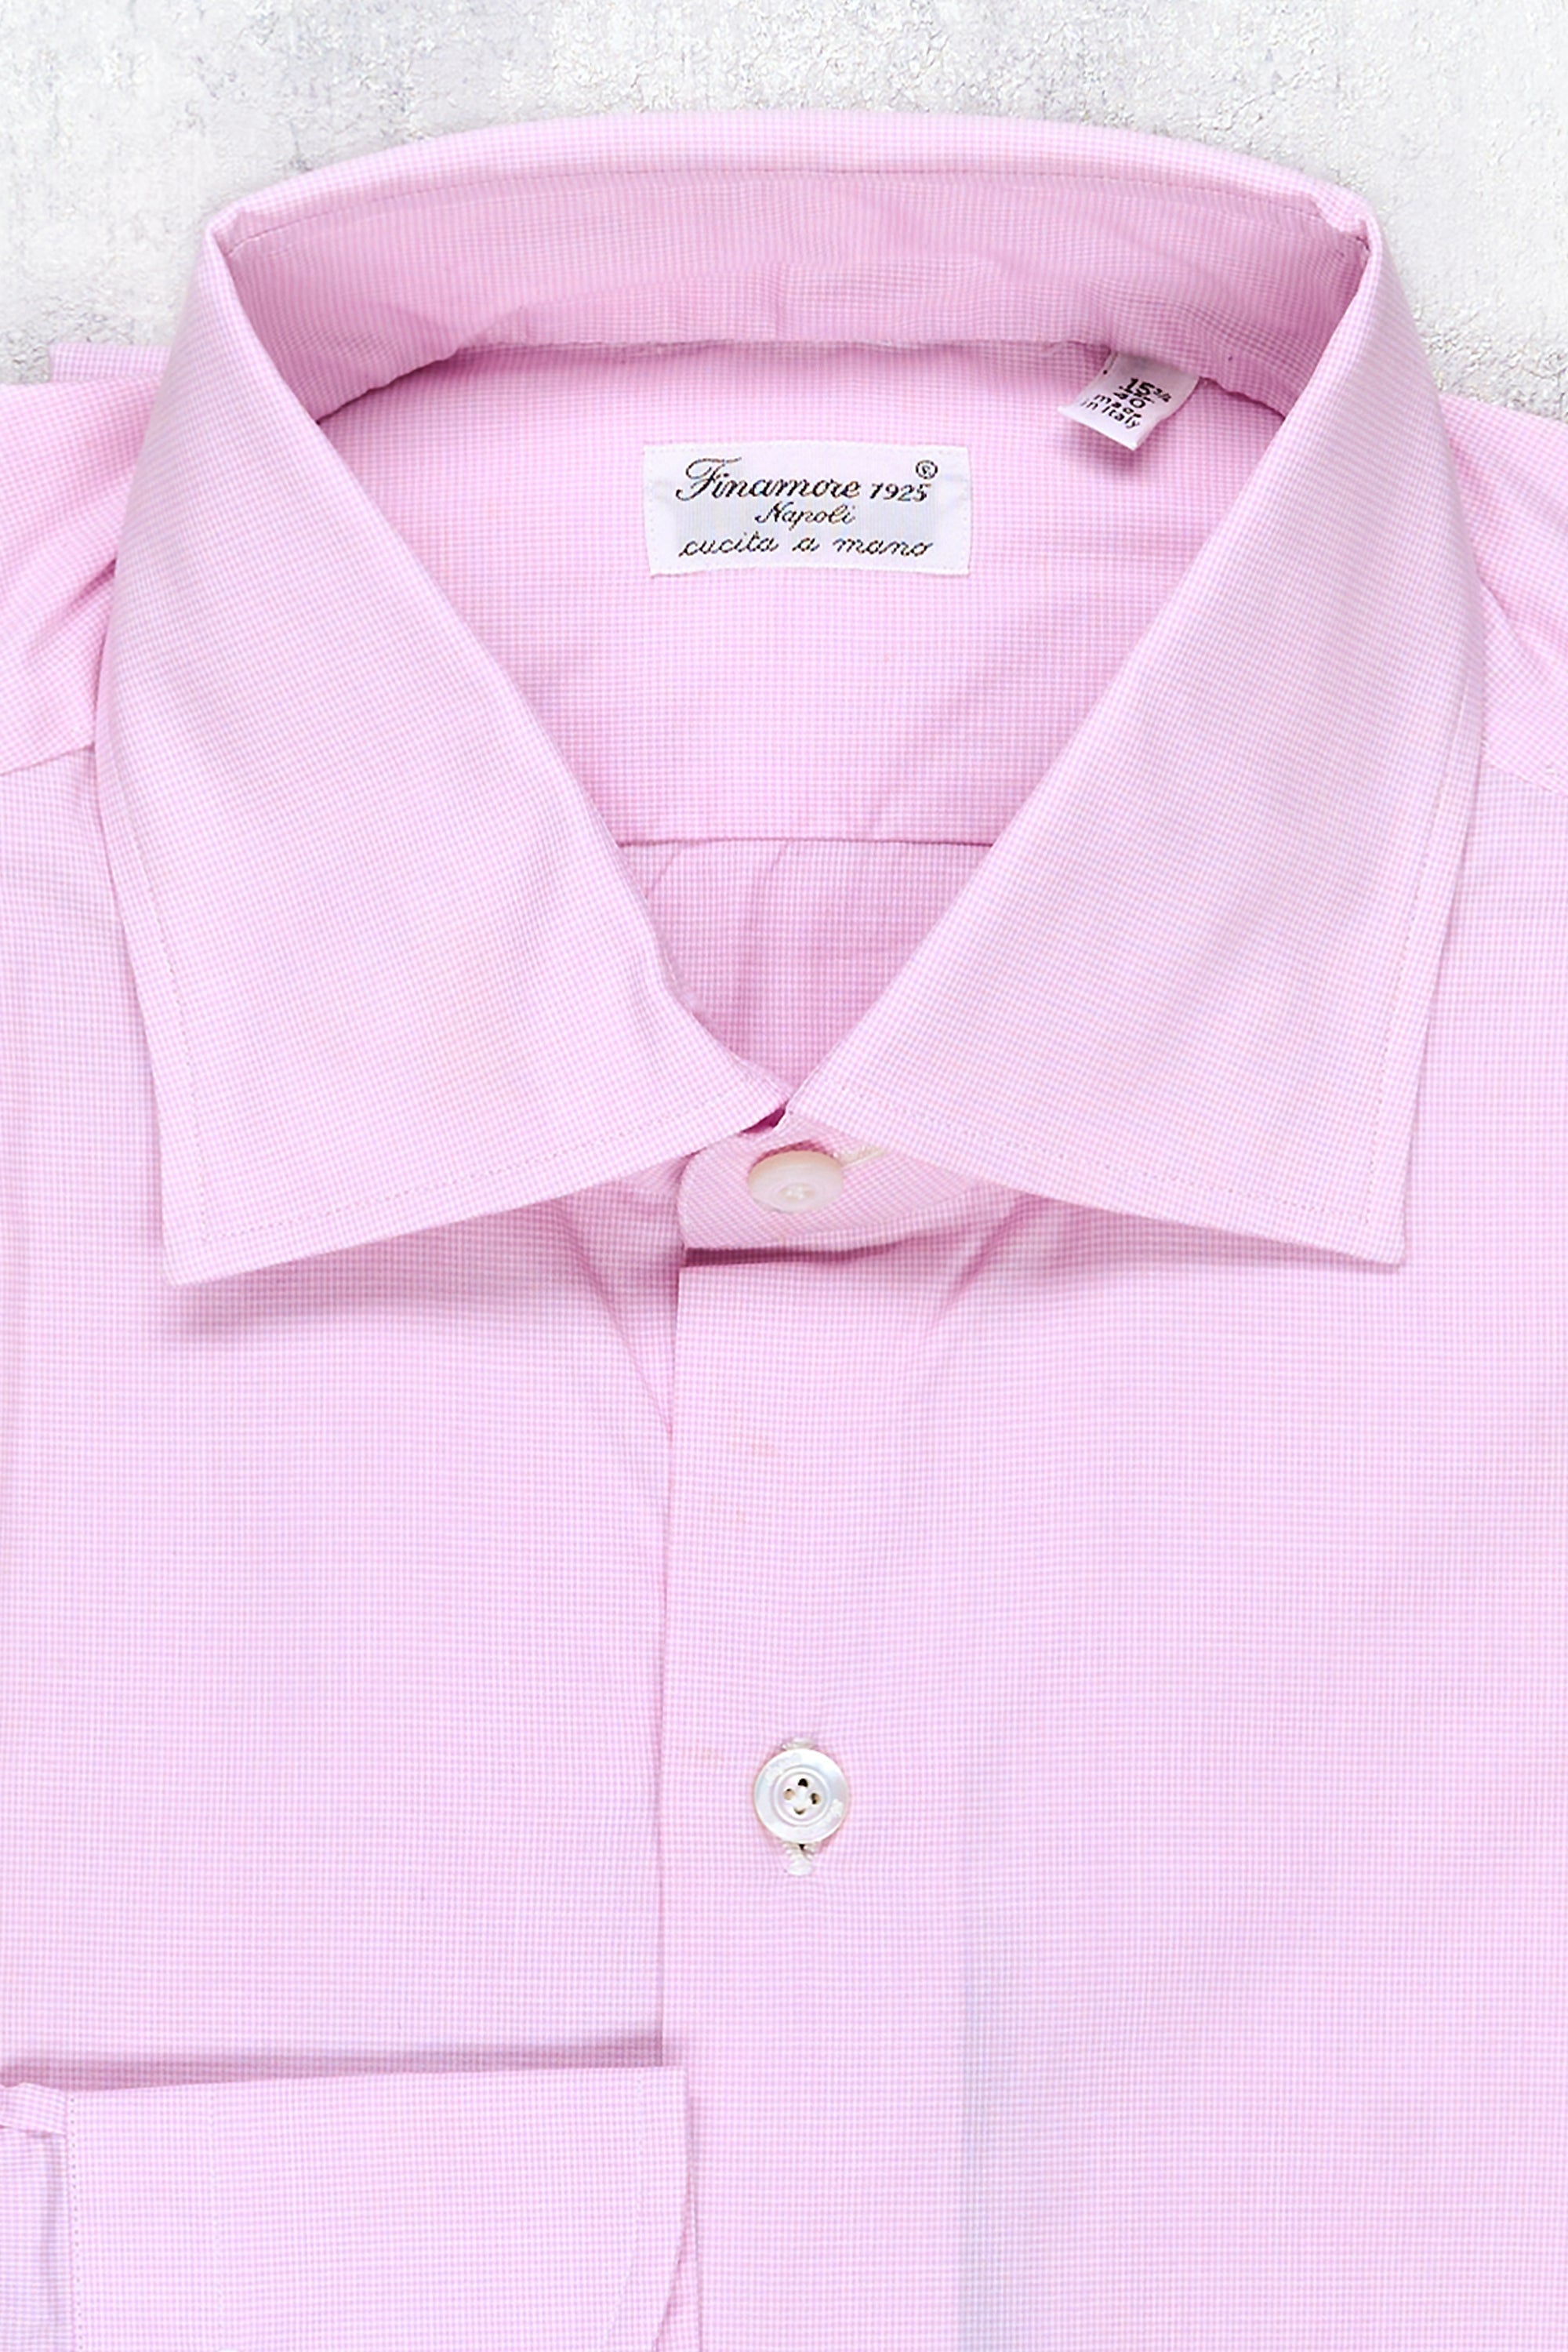 Finamore Pink Pinchecks Cotton Spread Collar Dress Shirt